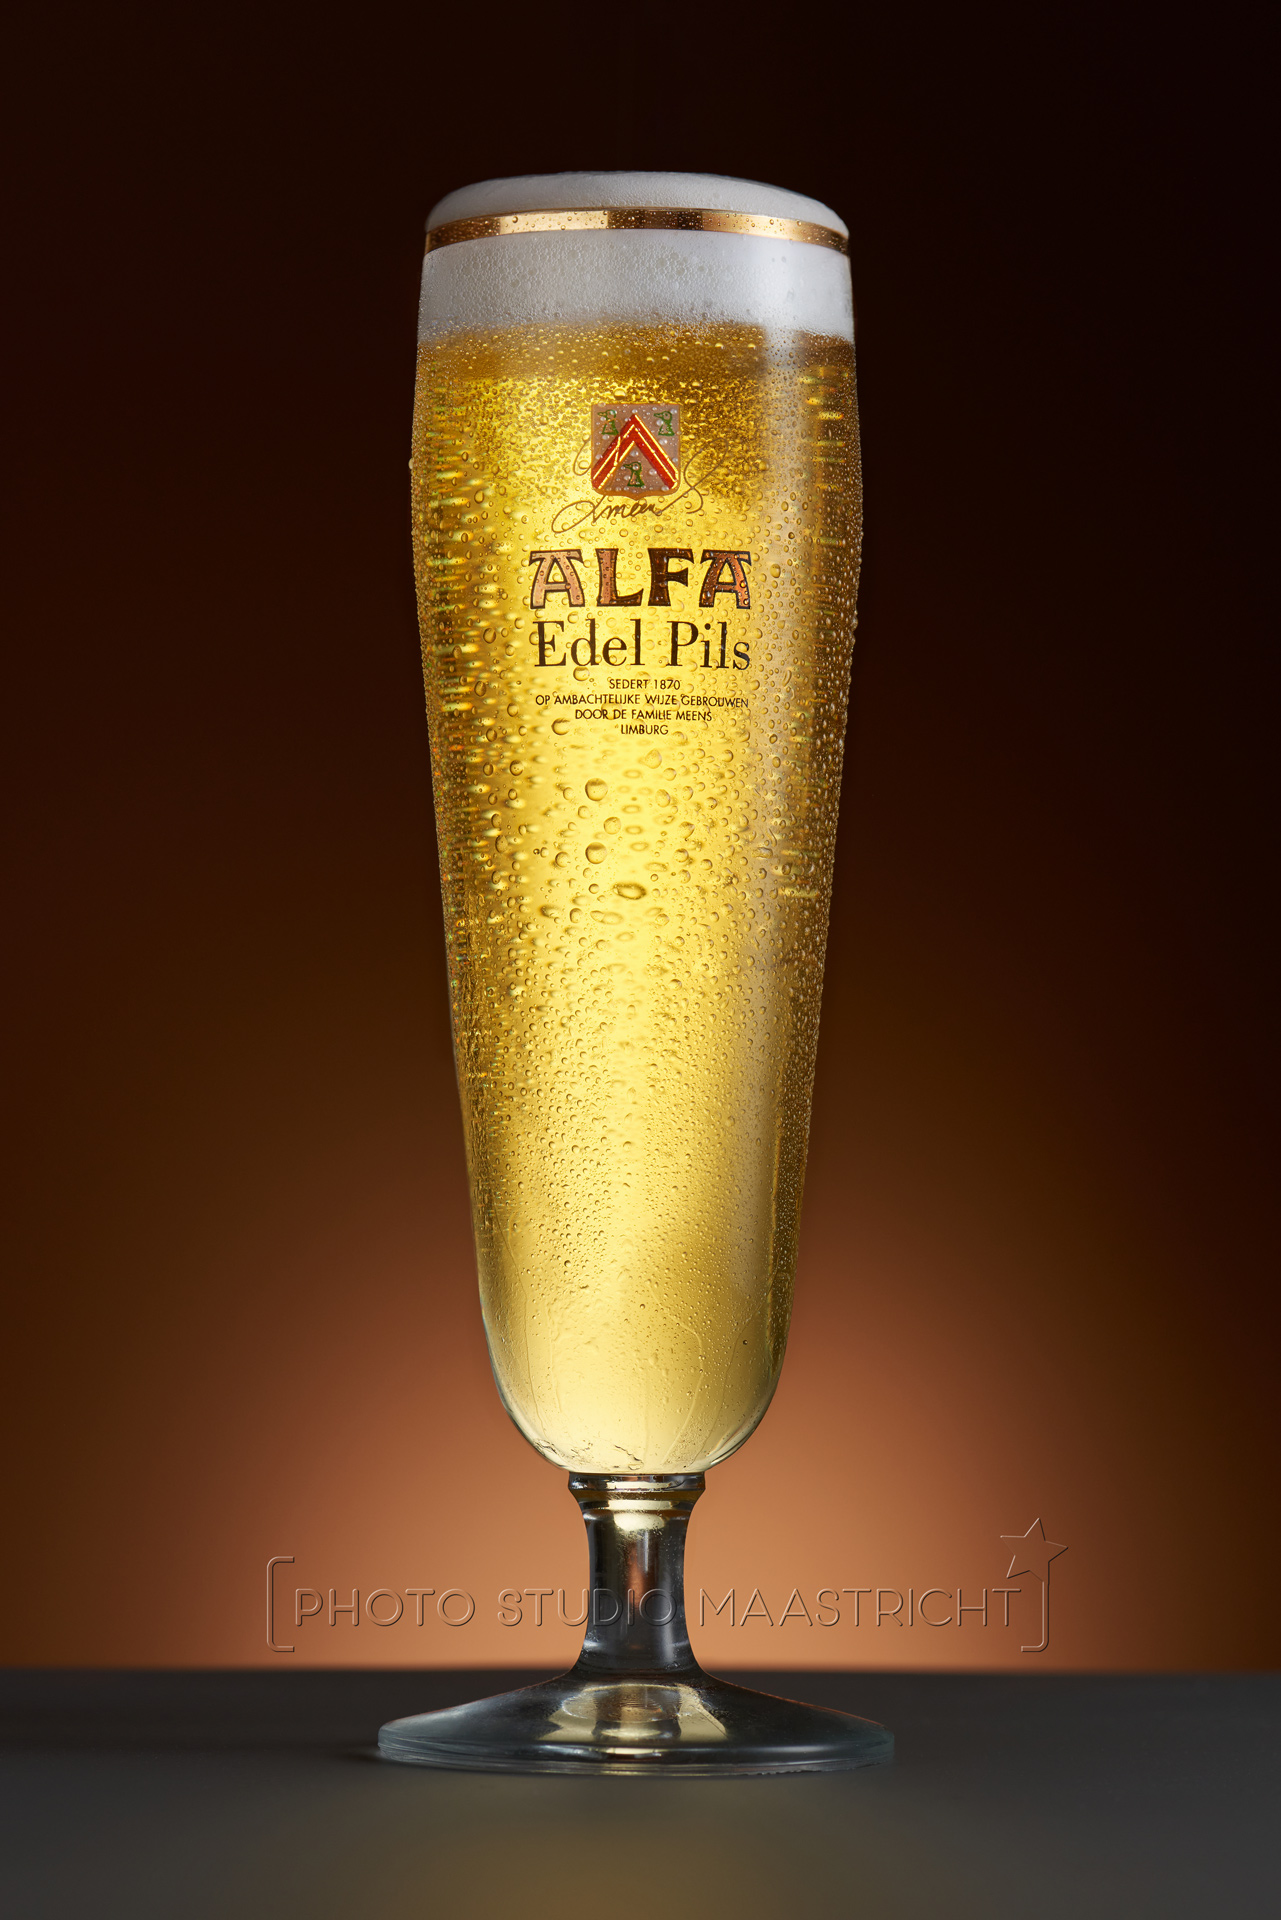 Productfotograaf Limburg - Alfa Bier product fotoshoot